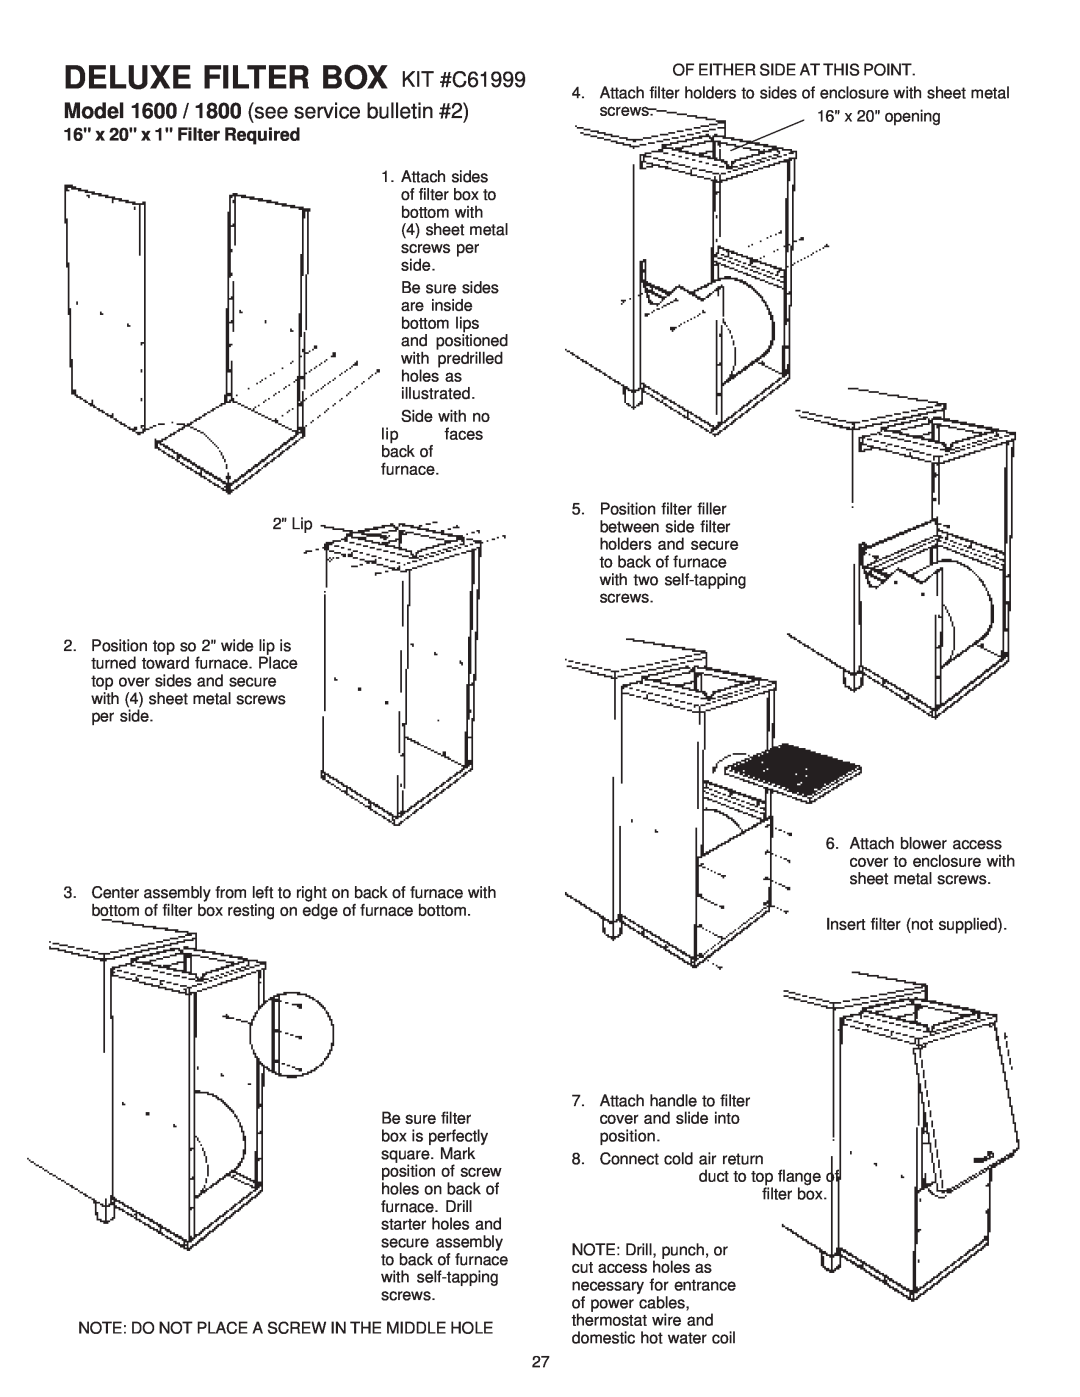 United States Stove manual DELUXE FILTER BOX KIT #C61999, Model 1600 / 1800 see service bulletin #2 